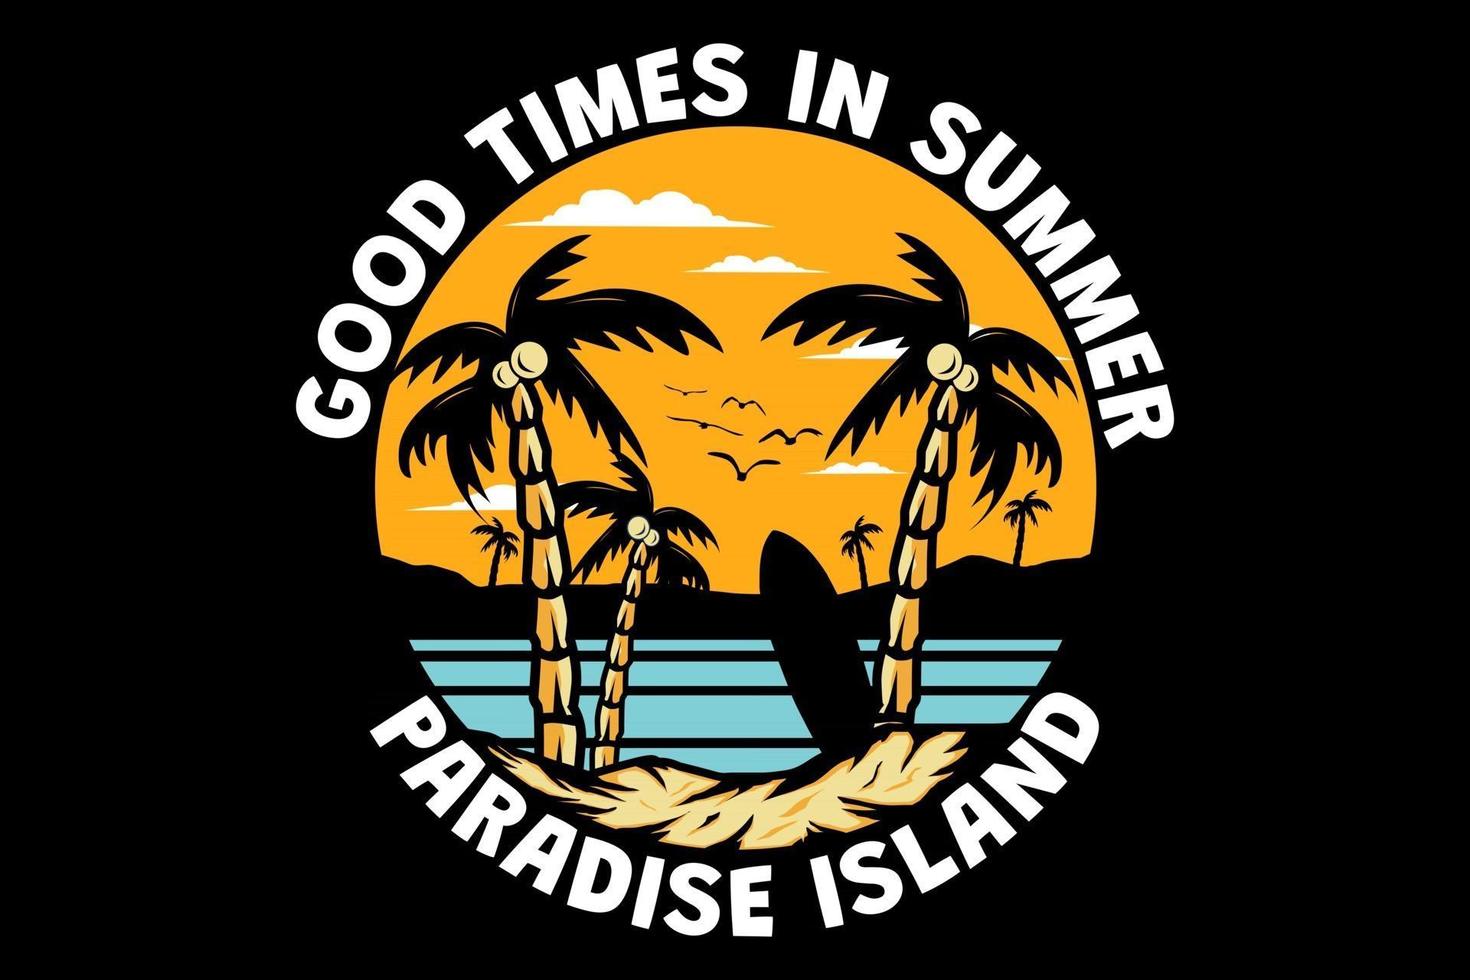 T-shirt good times in summer paradise island beach hand drawn retro vintage style vector